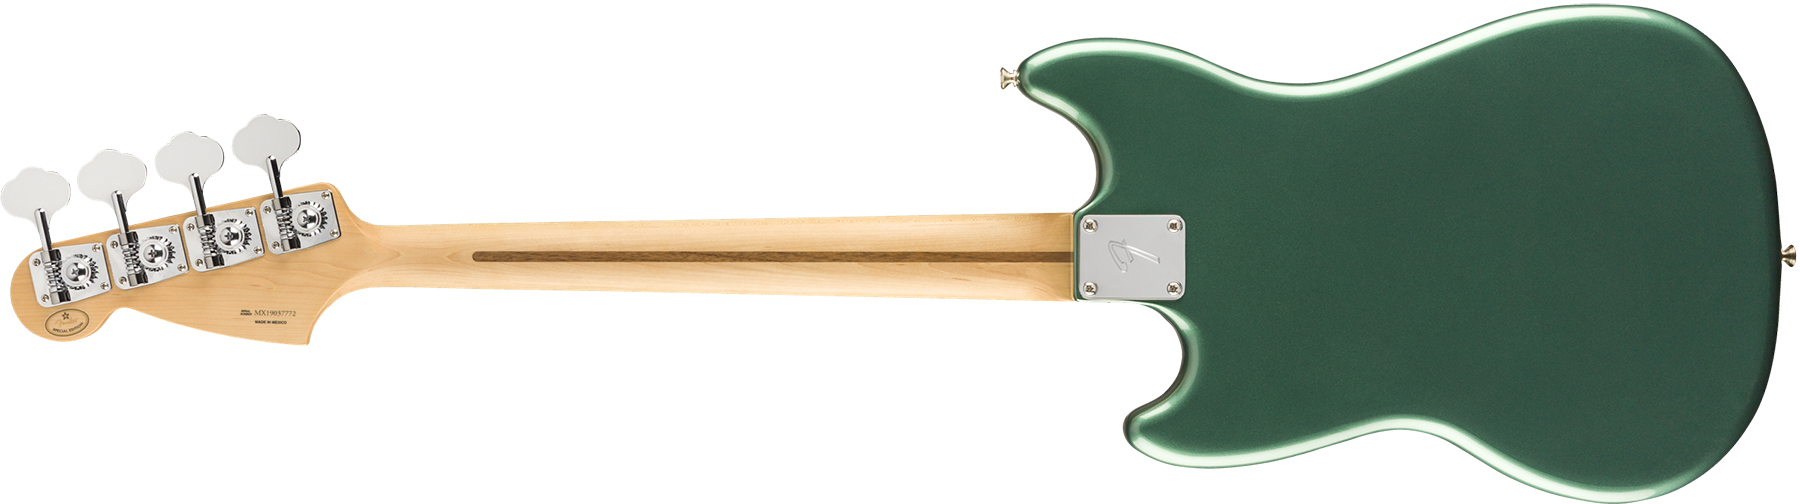 Fender Mustang Bass Pj Player Ltd Mex Pf - Sherwood Green Metallic - Short scale elektrische bas - Variation 1